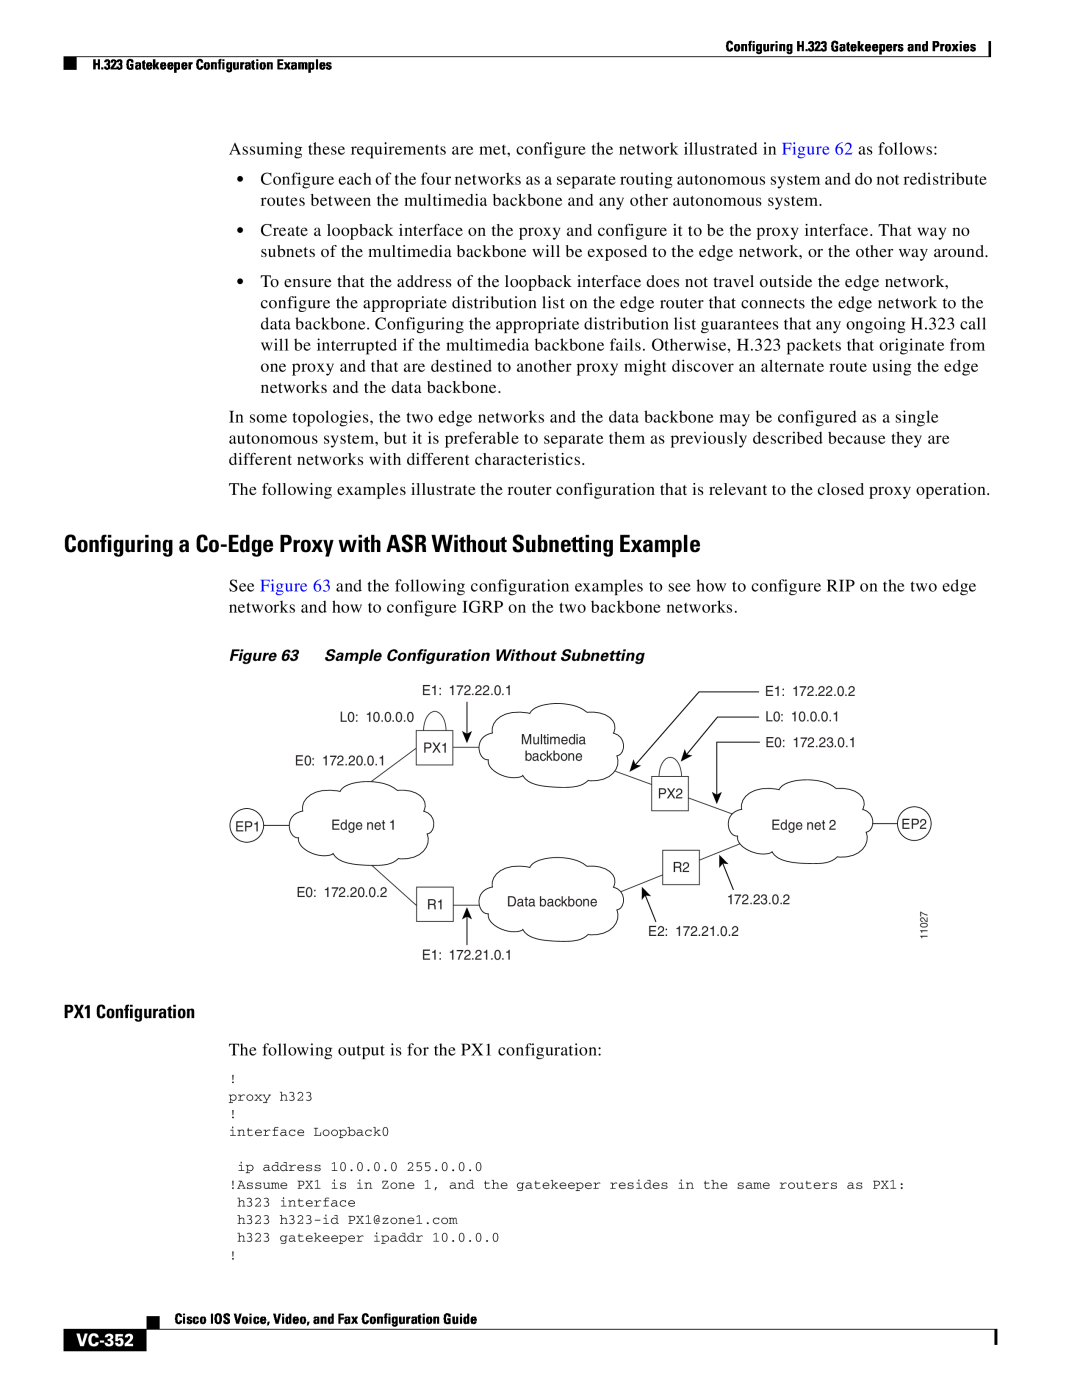 Cisco Systems VC-289 manual PX1 Configuration, VC-352 